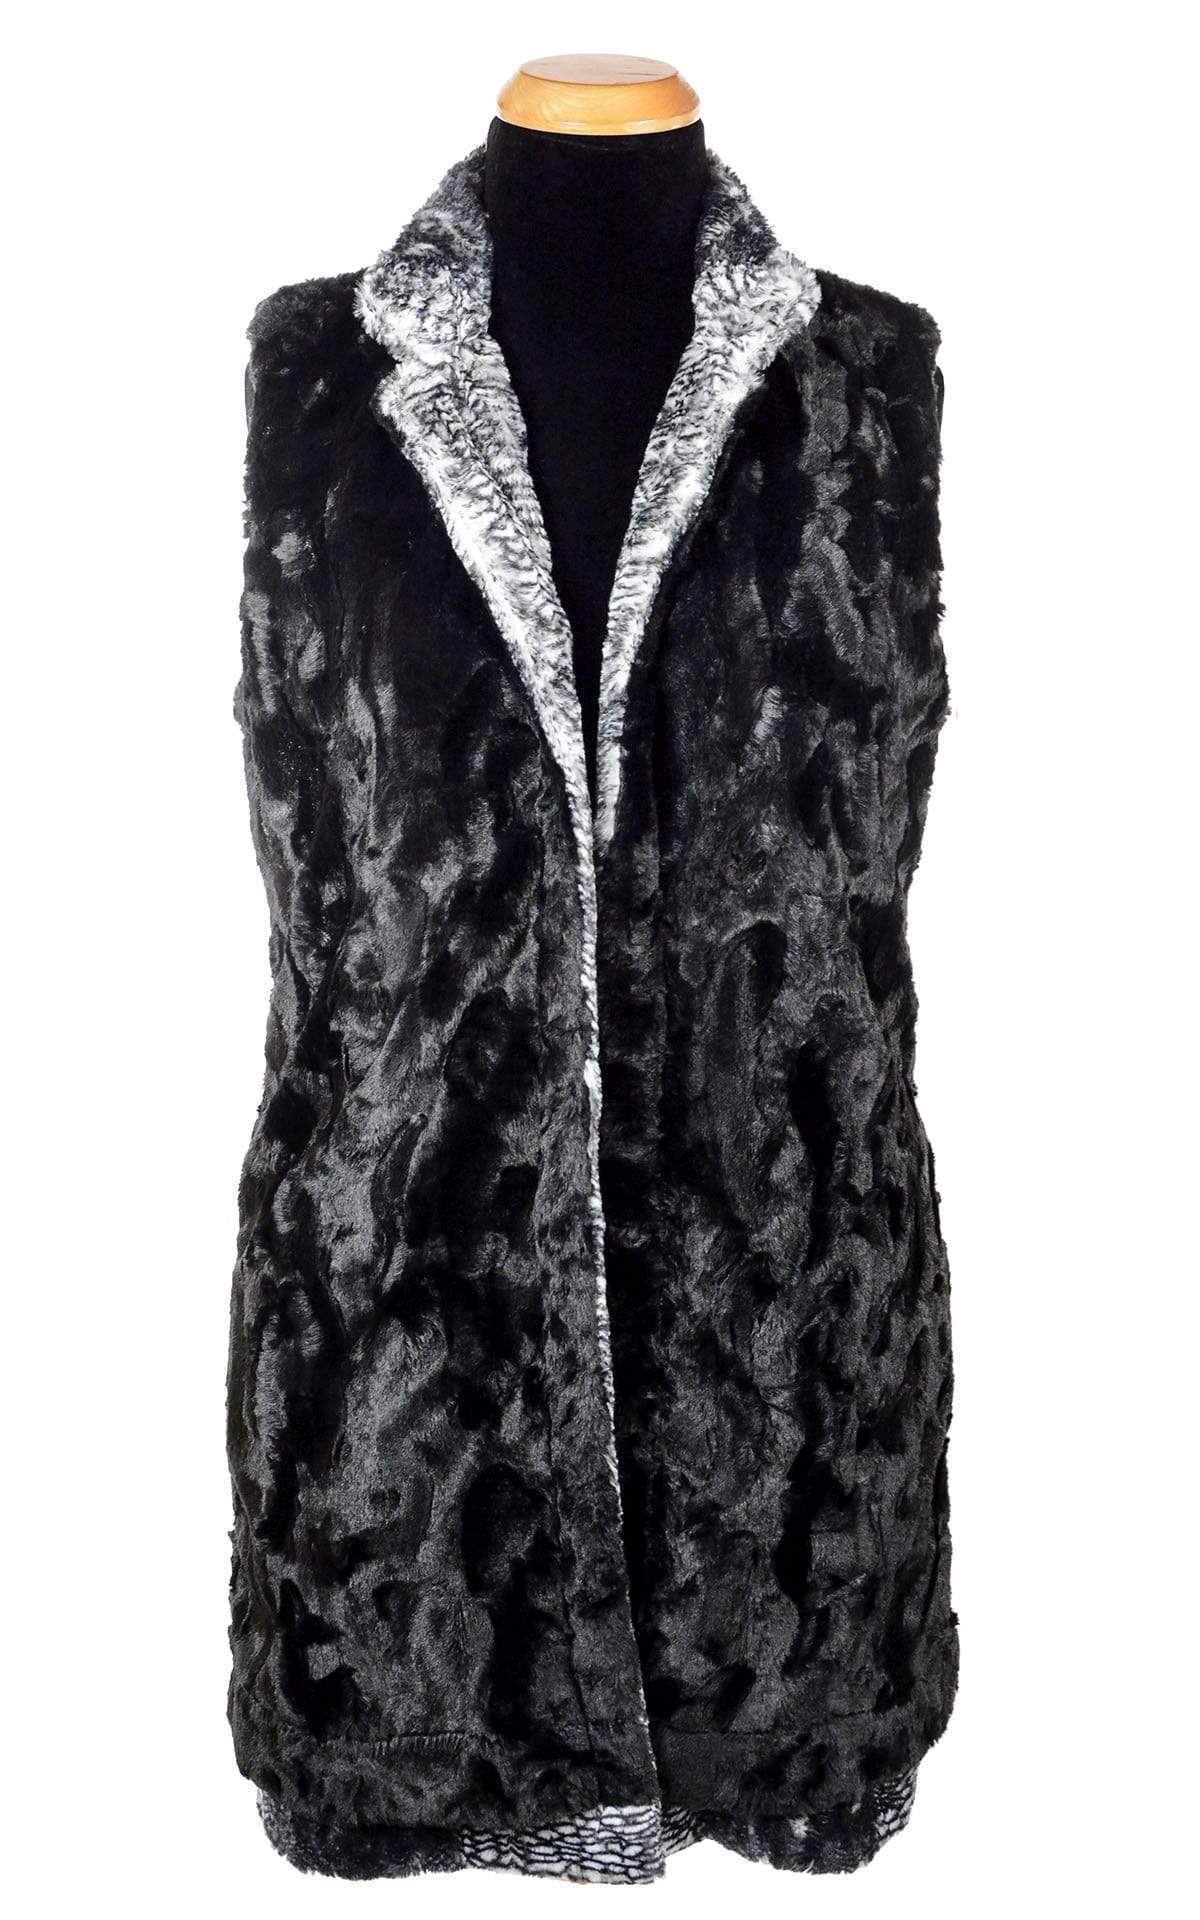 Reversed Mandarin Vest | Luxury Faux Fur in Black Mamba with Cuddly Black | Handmade by Pandemonium Seattle USA